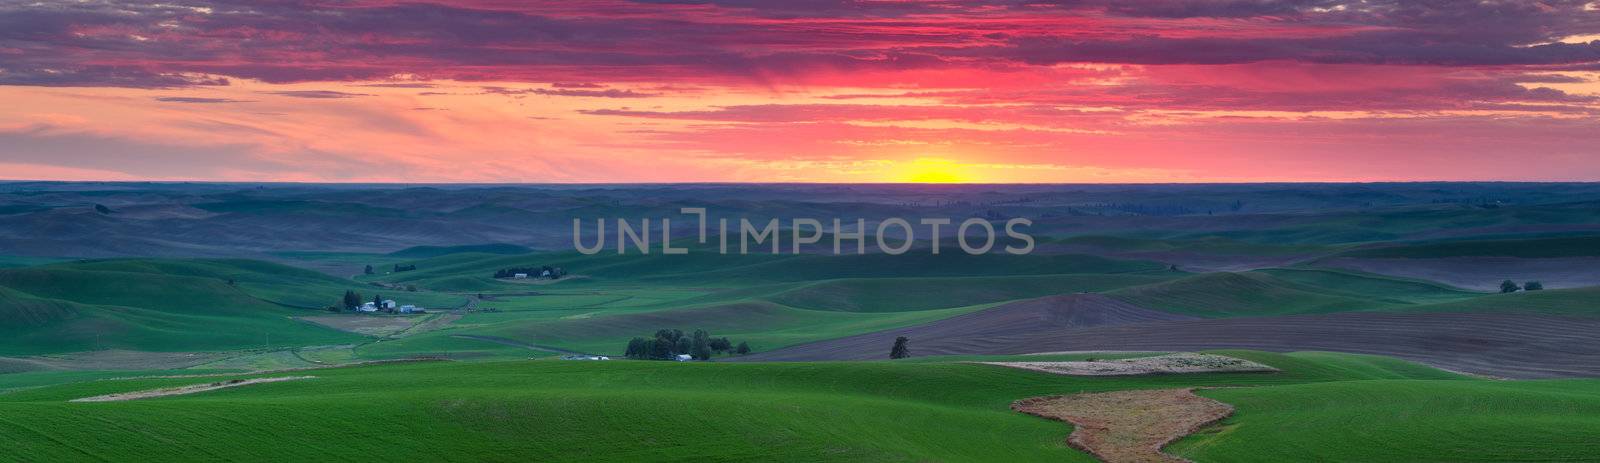 Sunset and green hills, Whitman County, Washington, USA